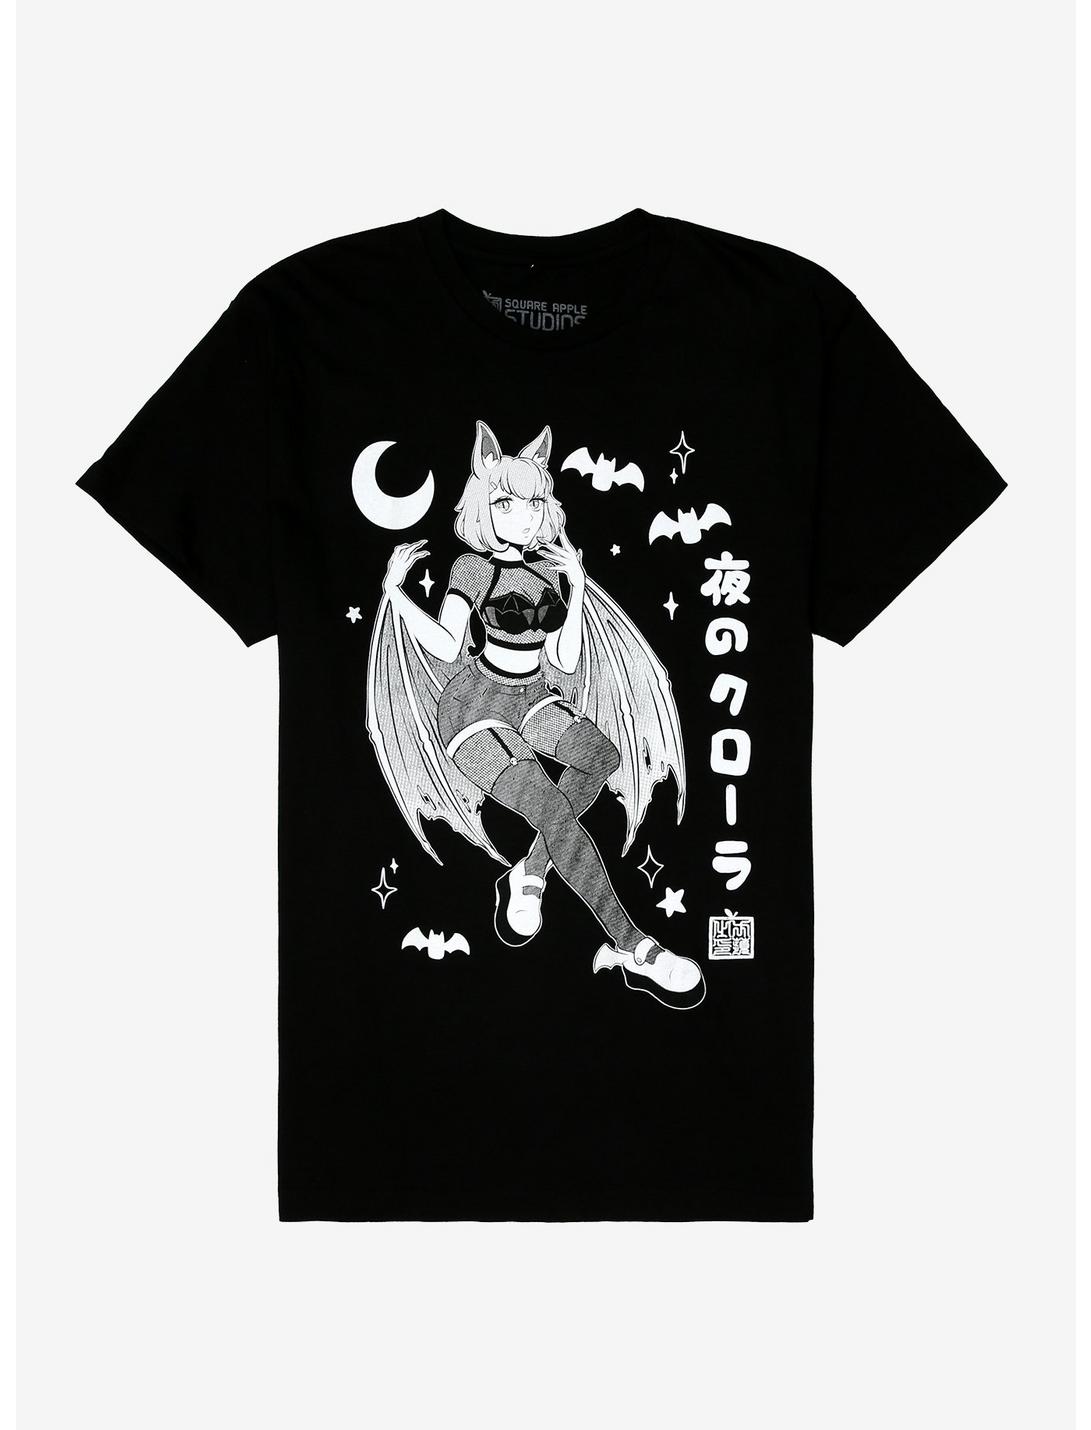 Nightcrawler Bat Girl T-Shirt By Square Apple Studios, BLACK, hi-res